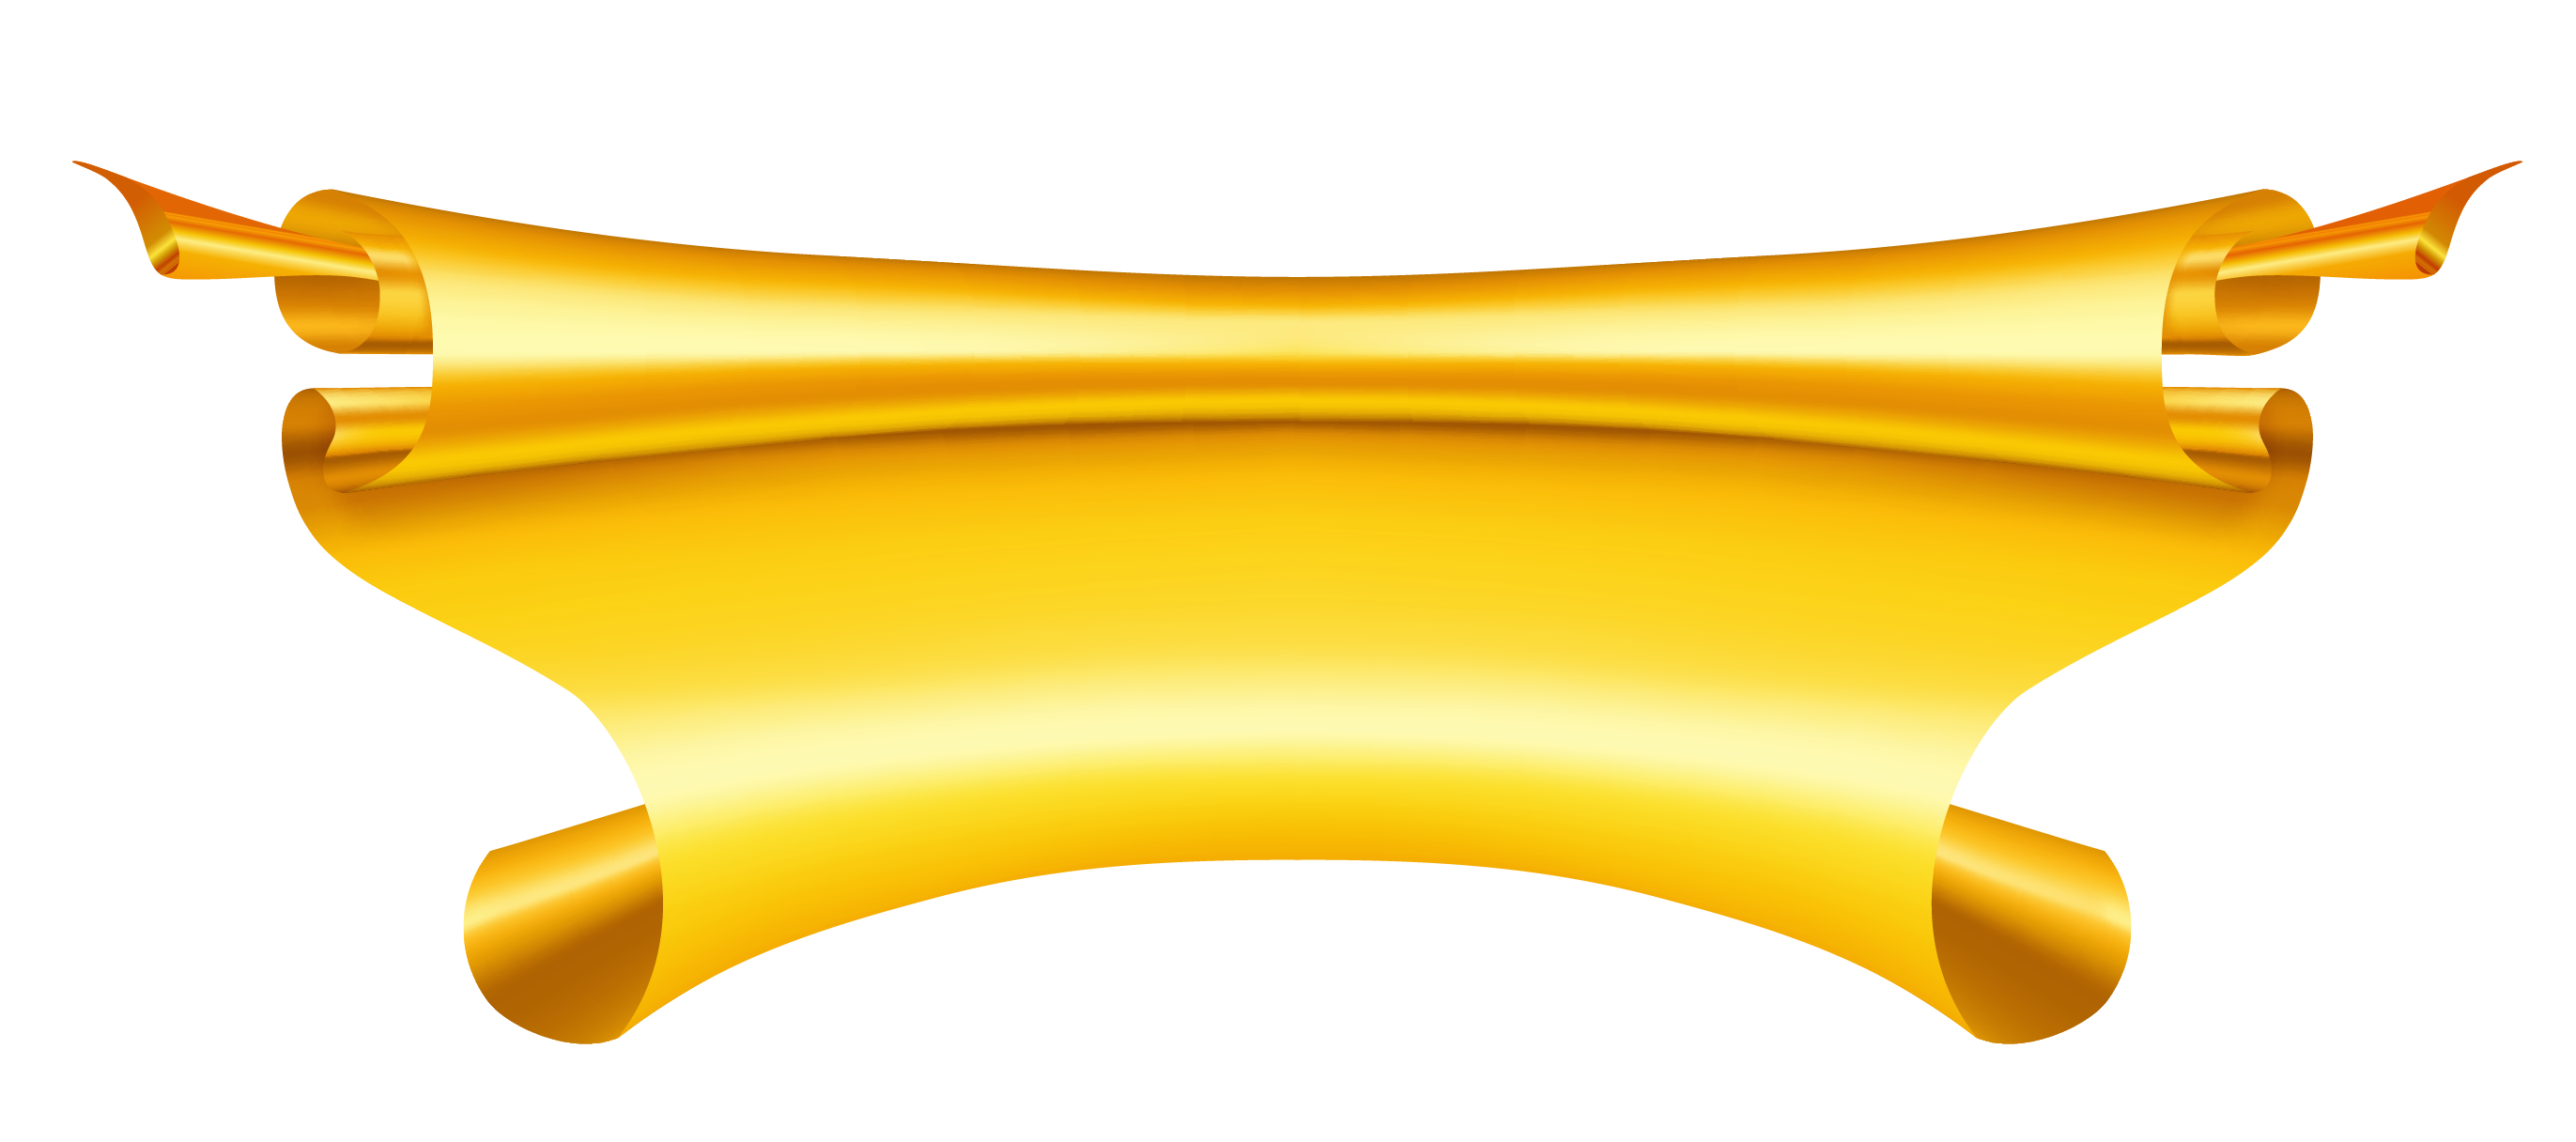 Banner de ouro download imagem transparente PNG